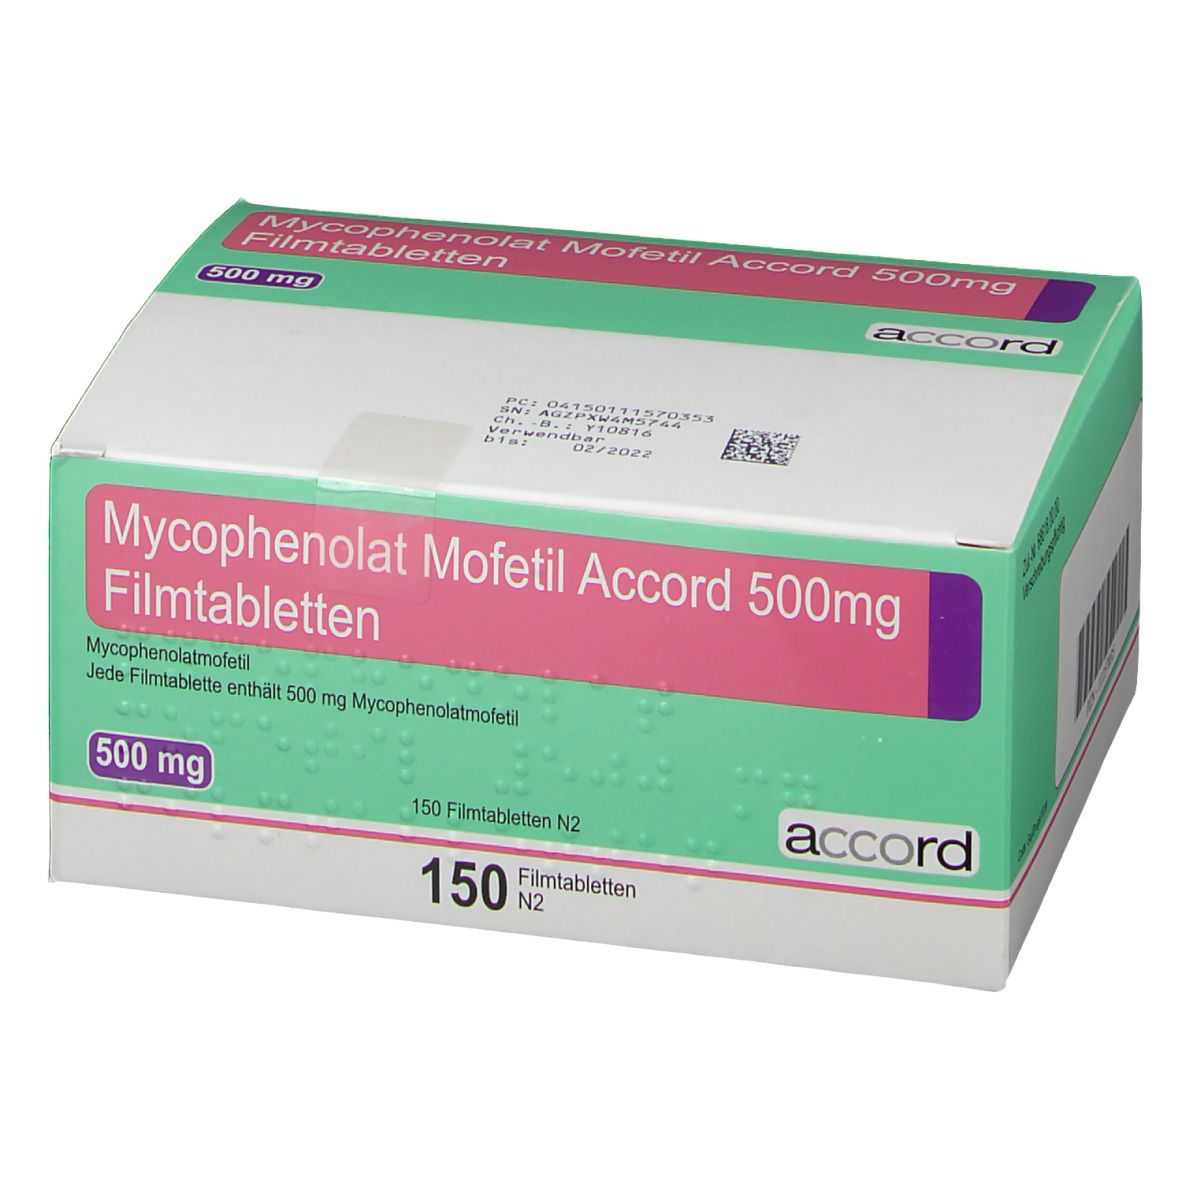 Mycophenolat Mofetil Accord 500 mg